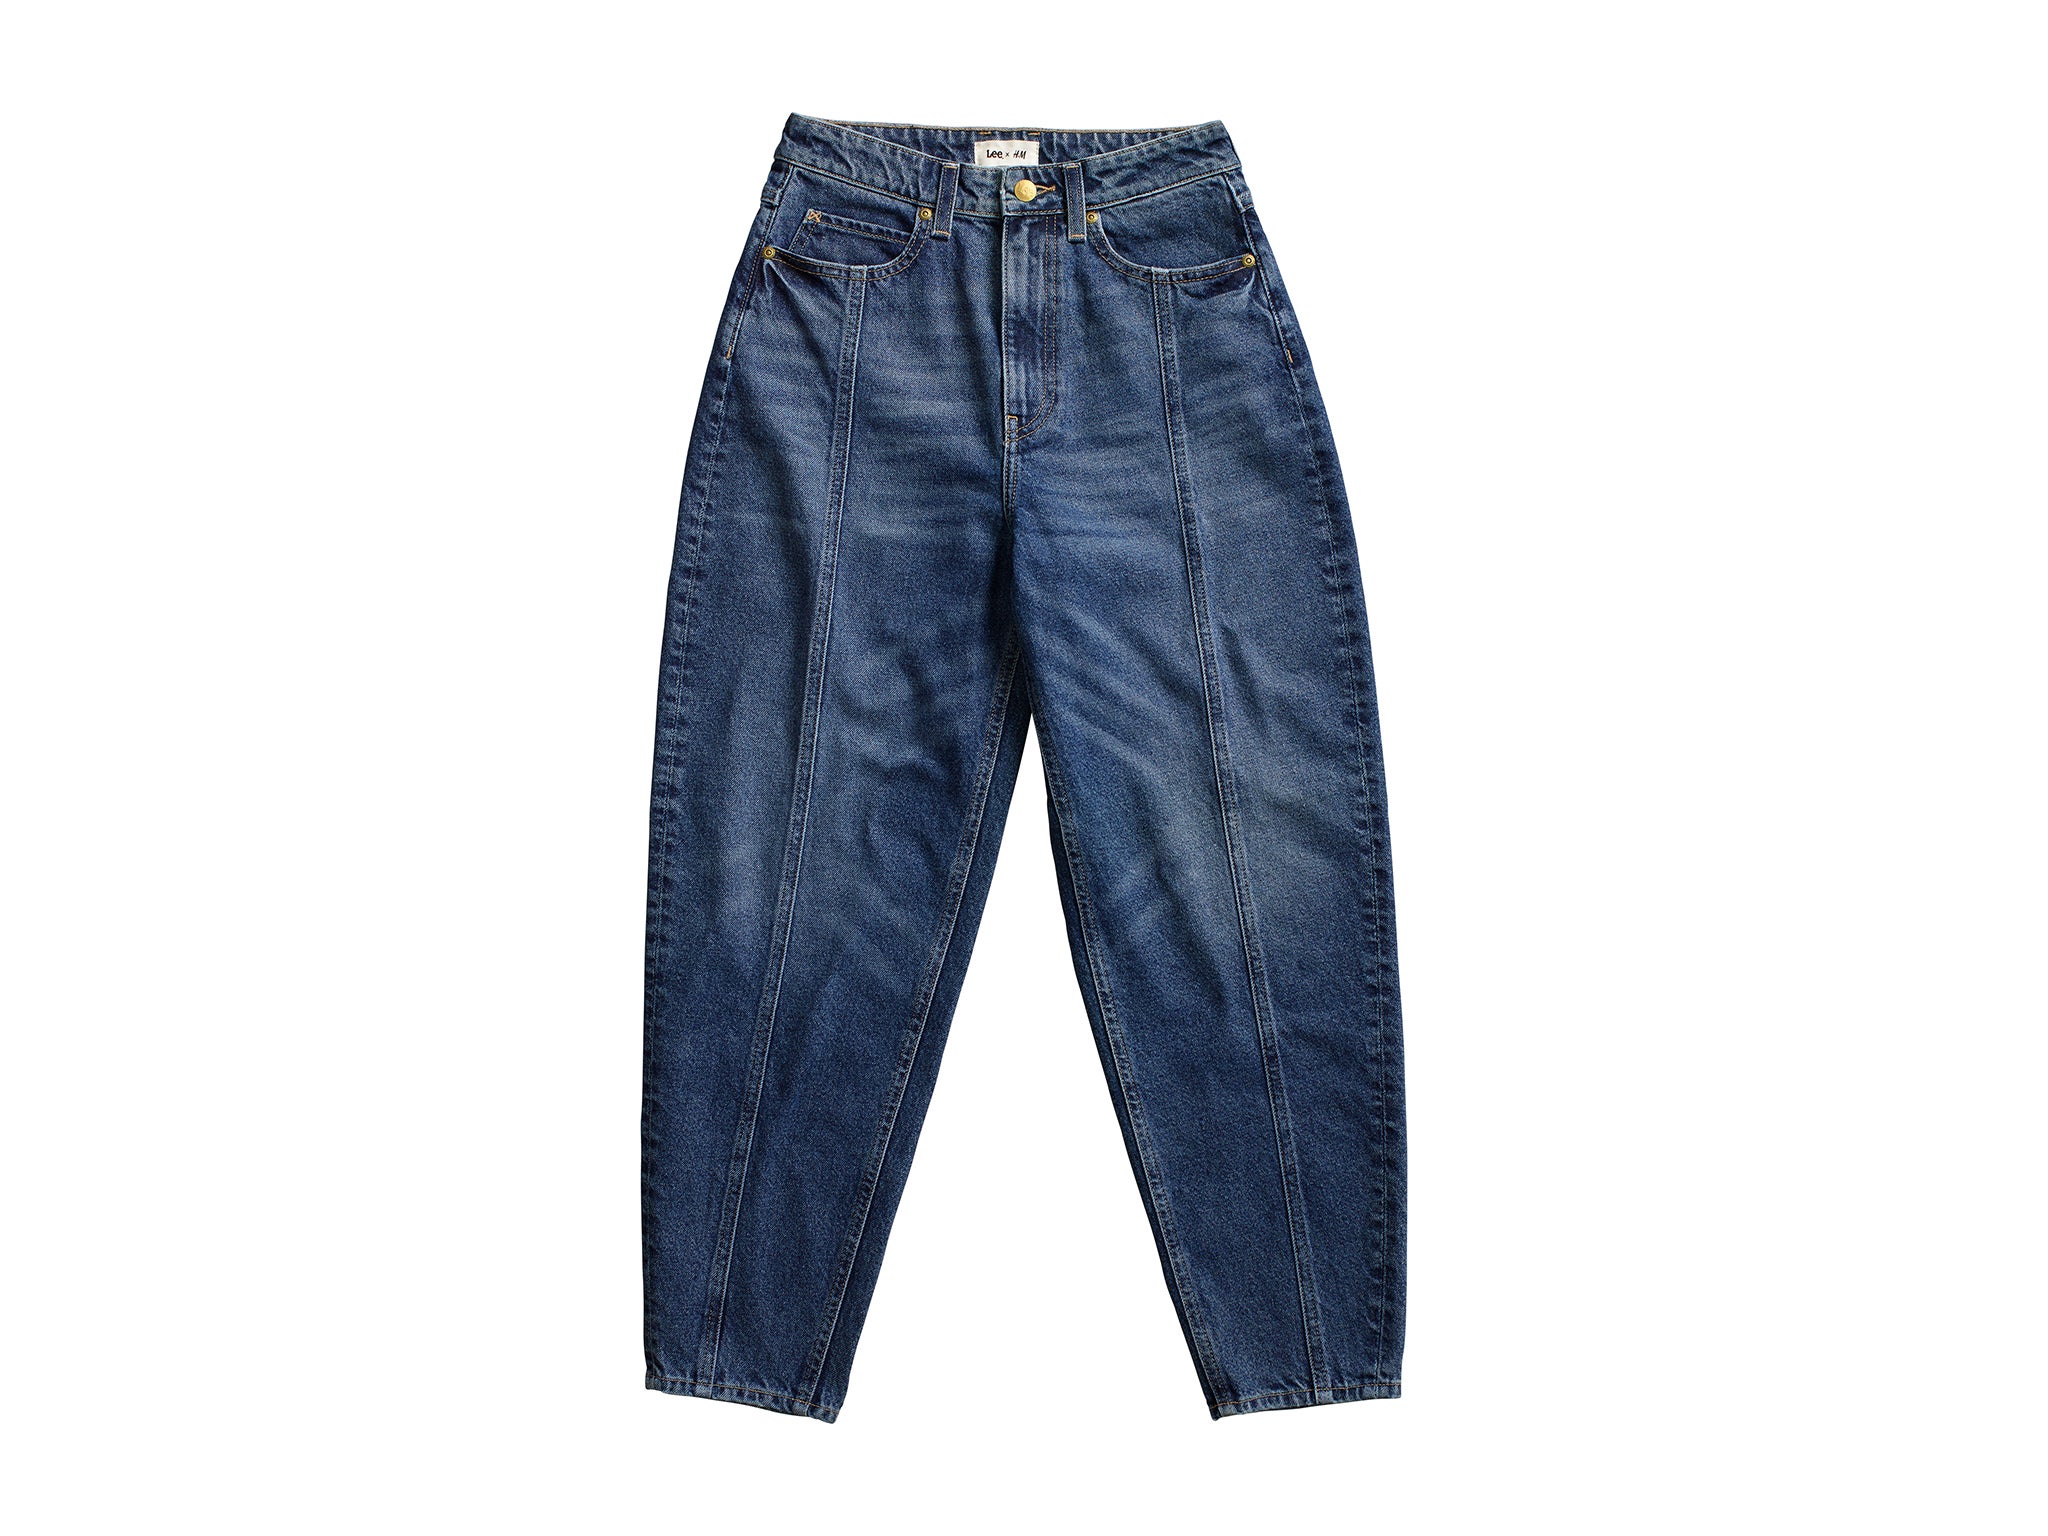 high-waist-mom-jeans-hm-lee-denim-colleciton-indybest